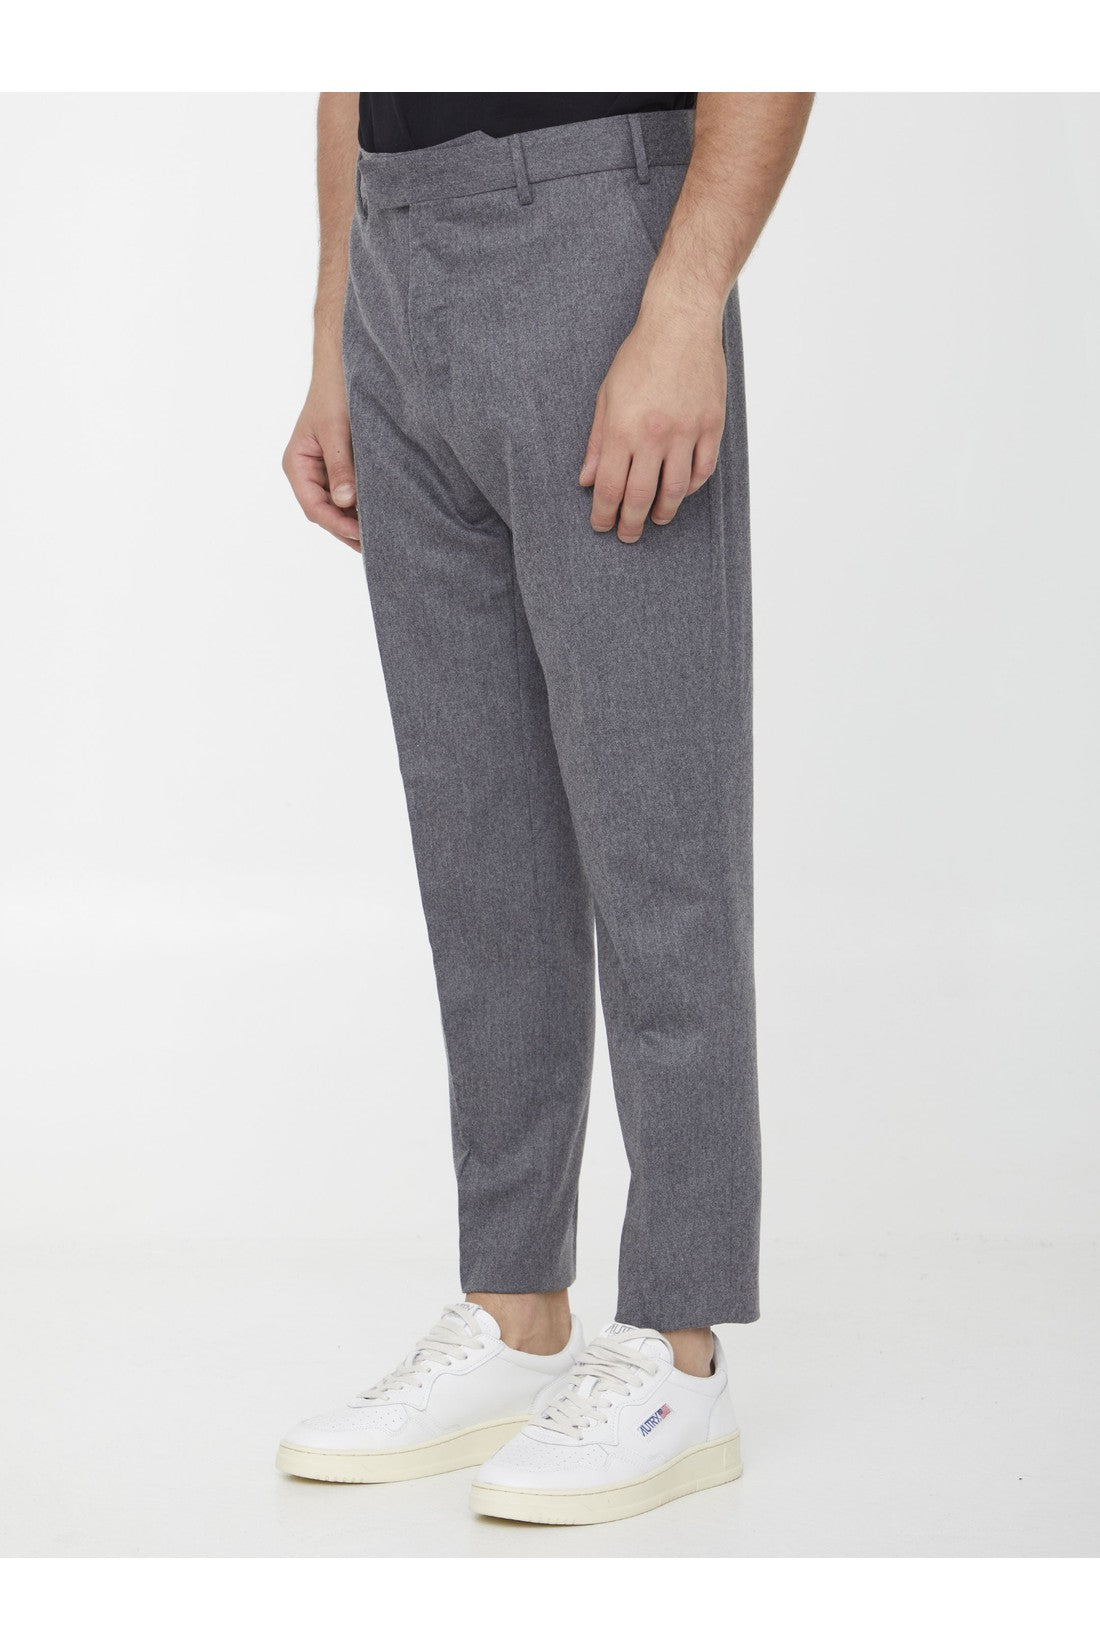 Grey wool trousers